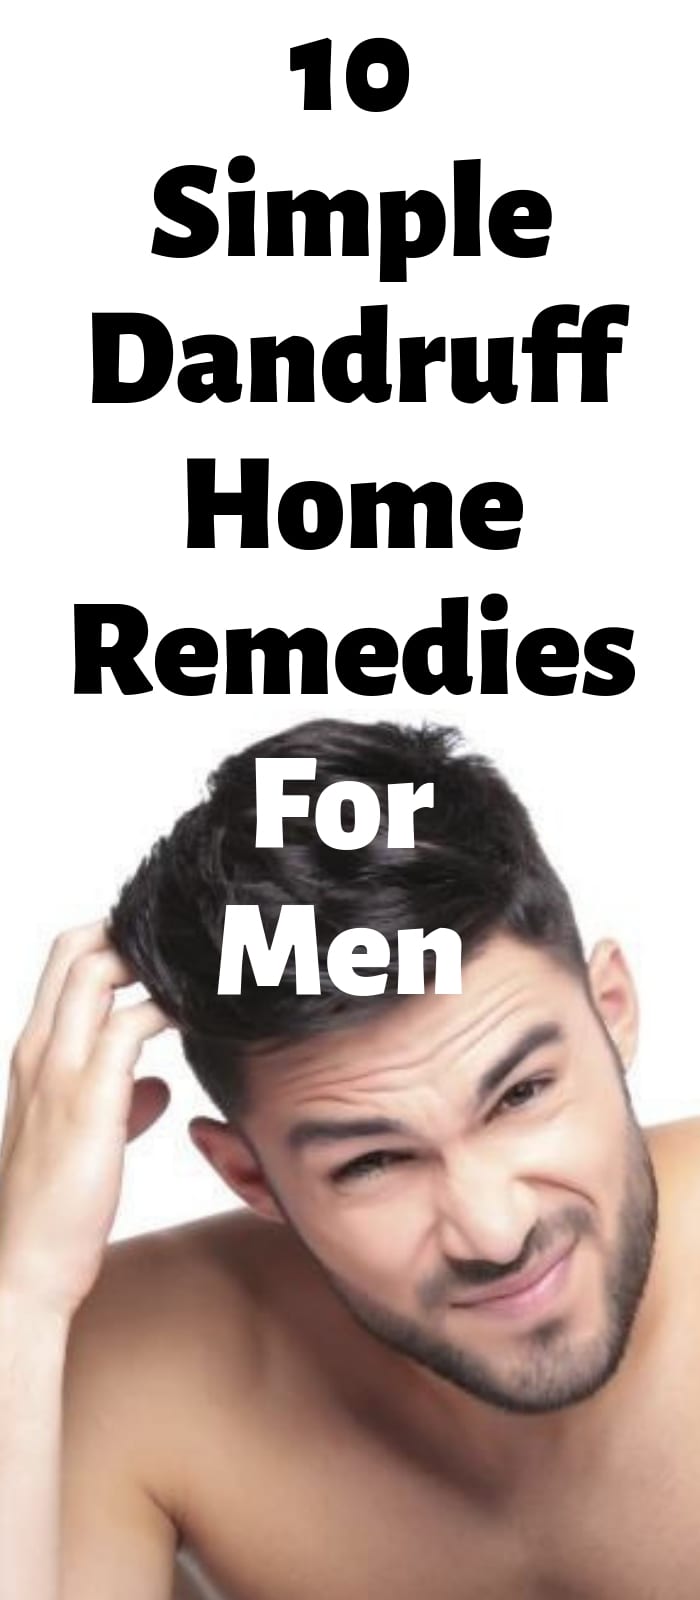 10 Simple Dandruff Home Remedies For Men